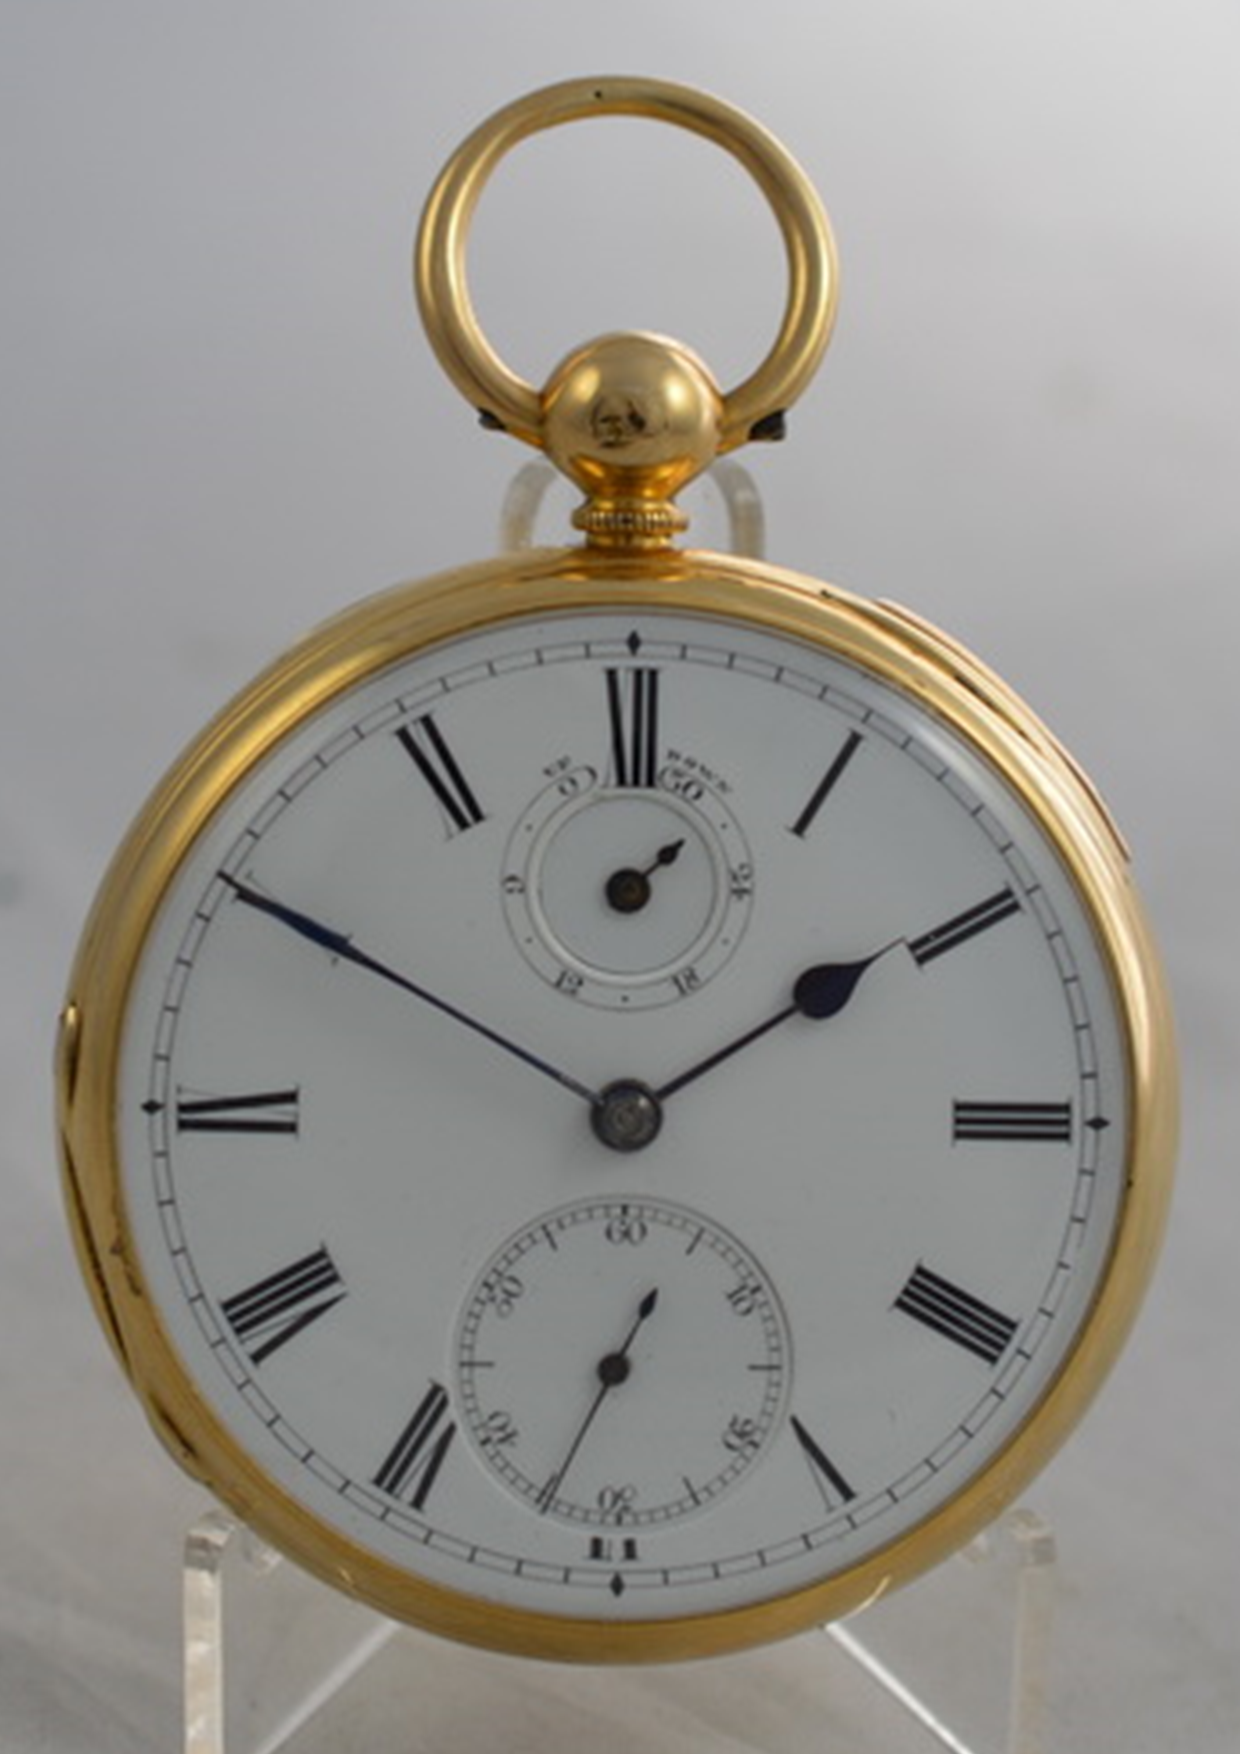 Mantel Clocks by Kembery Antique Clocks Ltd